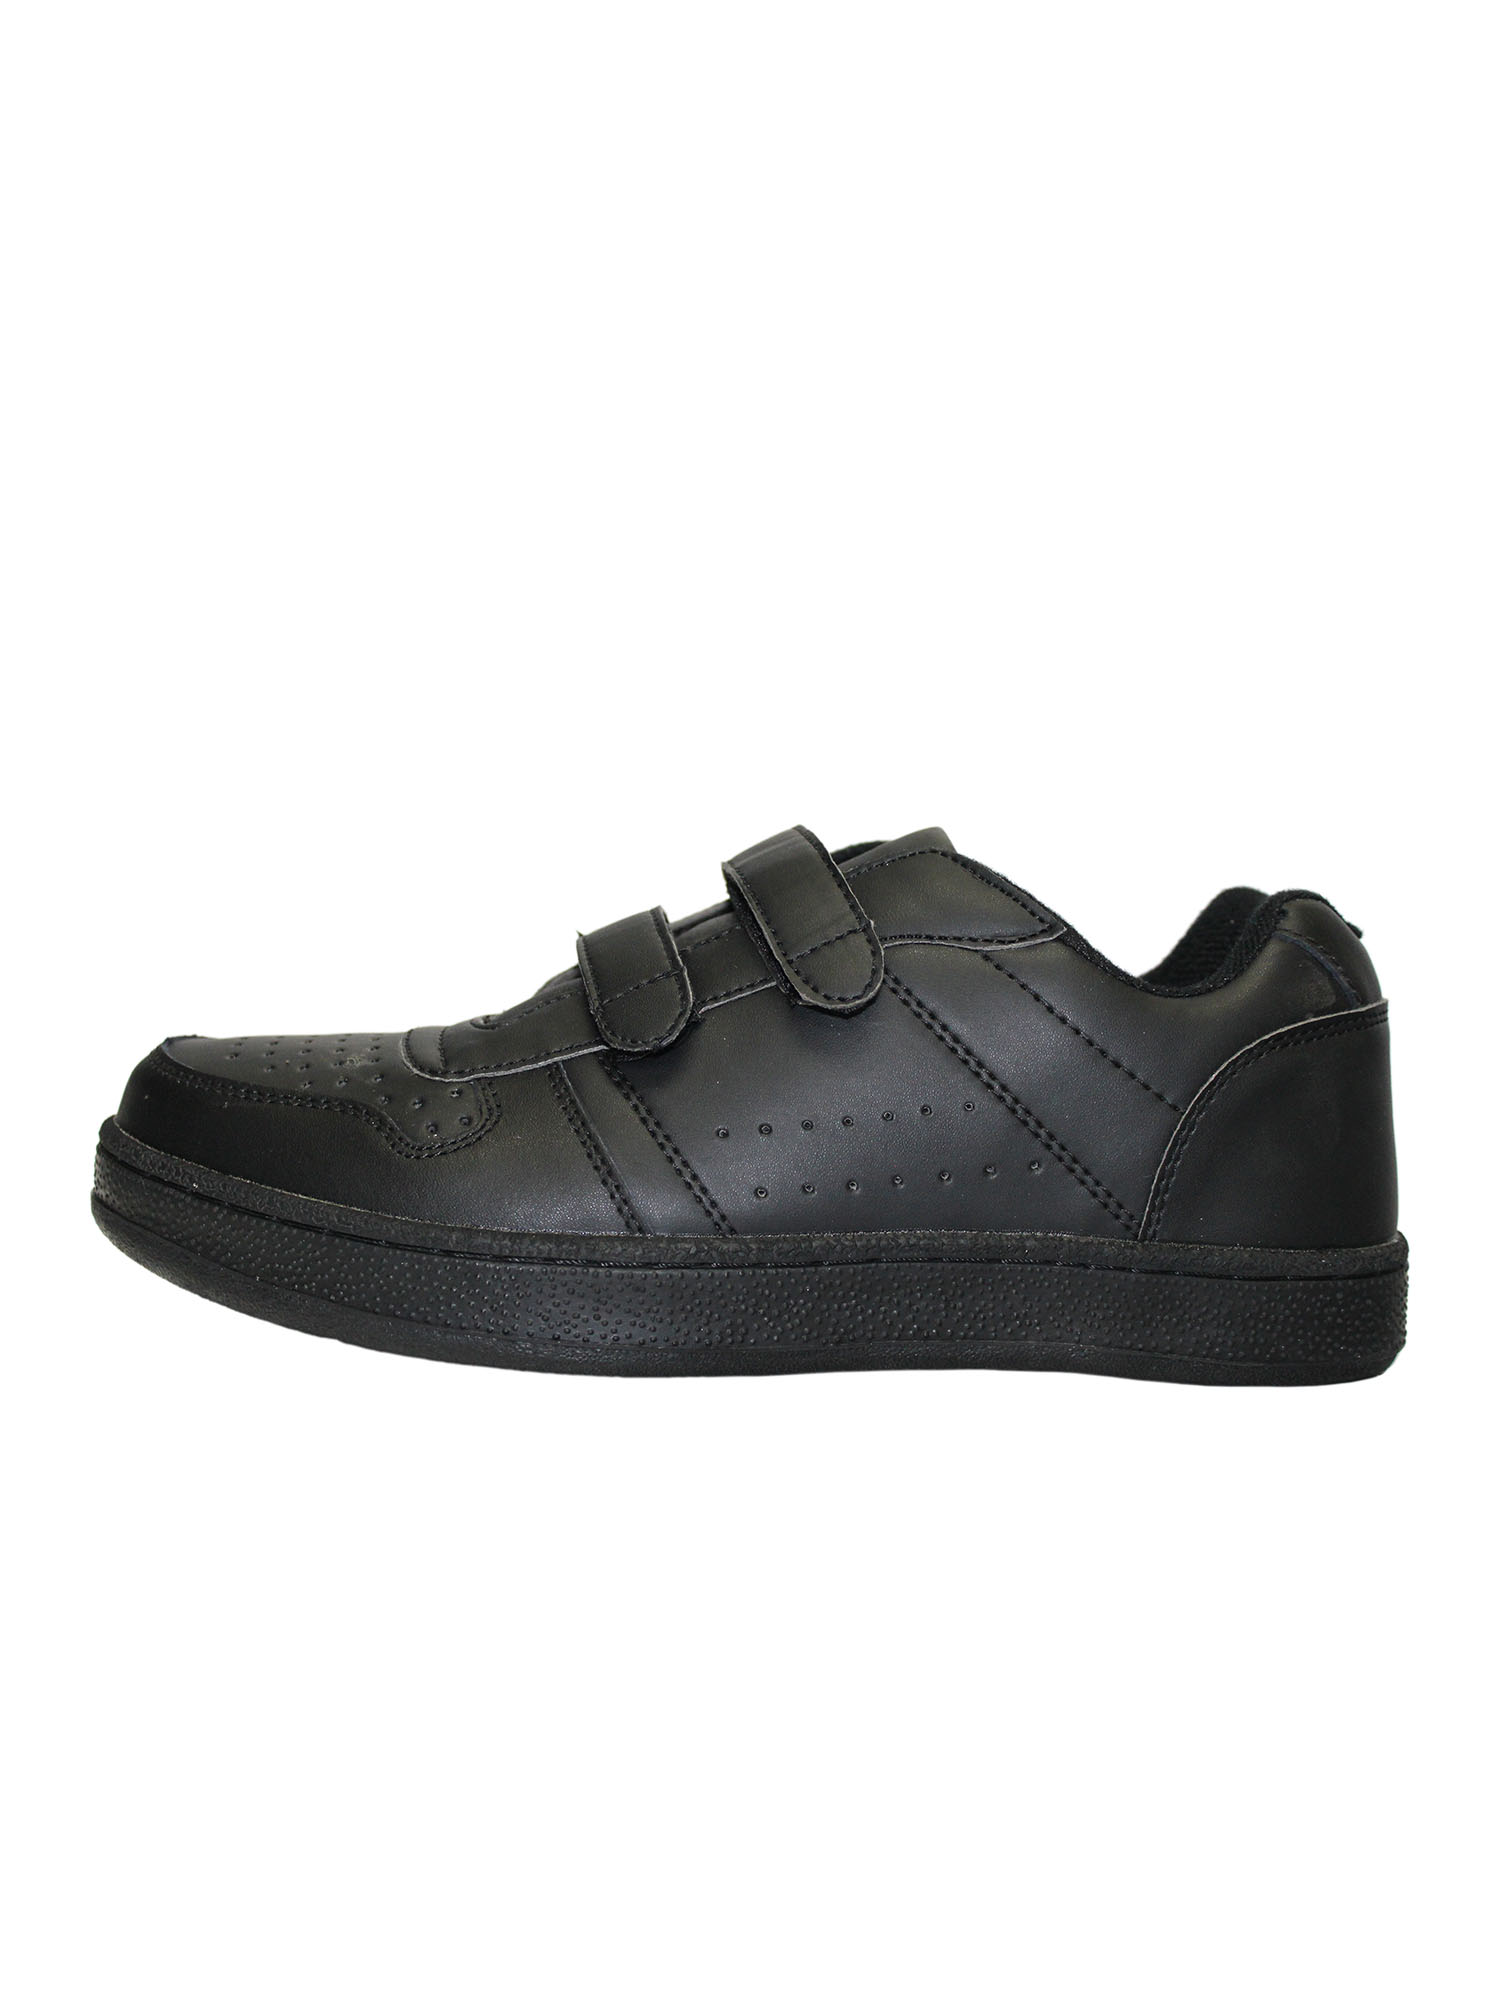 Tanleewa Men's Leather Strap Sneakers Lightweight Hook and Loop Walking Shoe Size 11 Adult Male - image 2 of 4